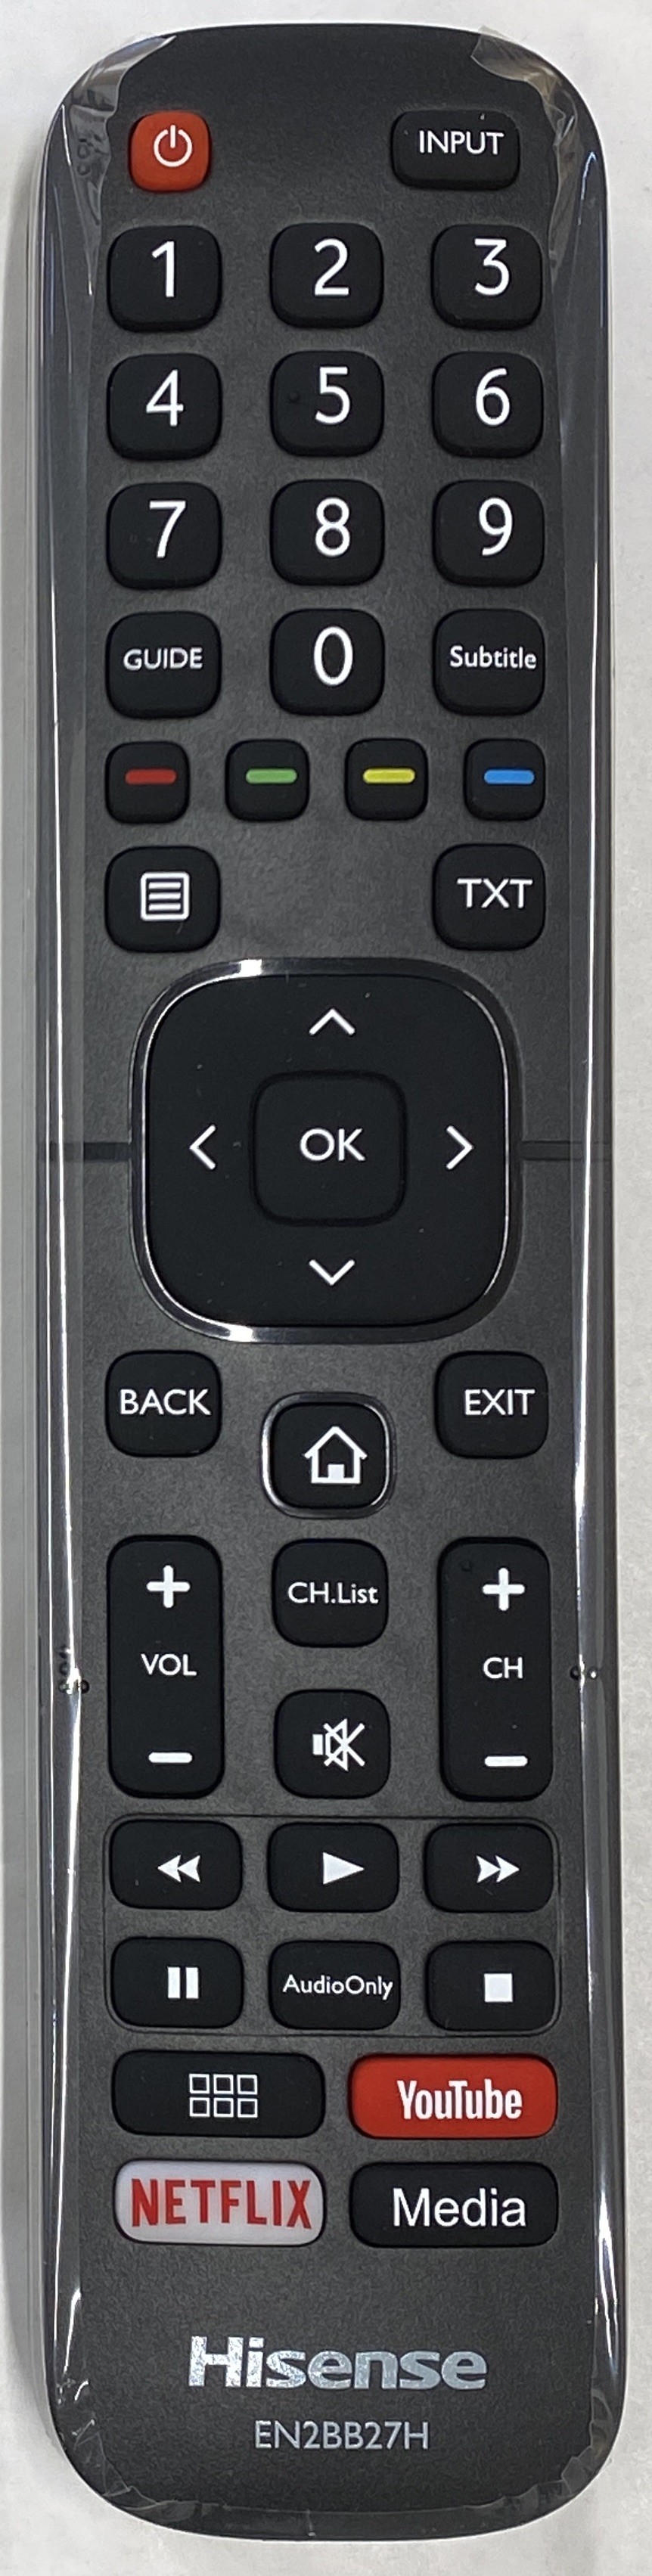 HISENSE H39A5600 Remote Control Original